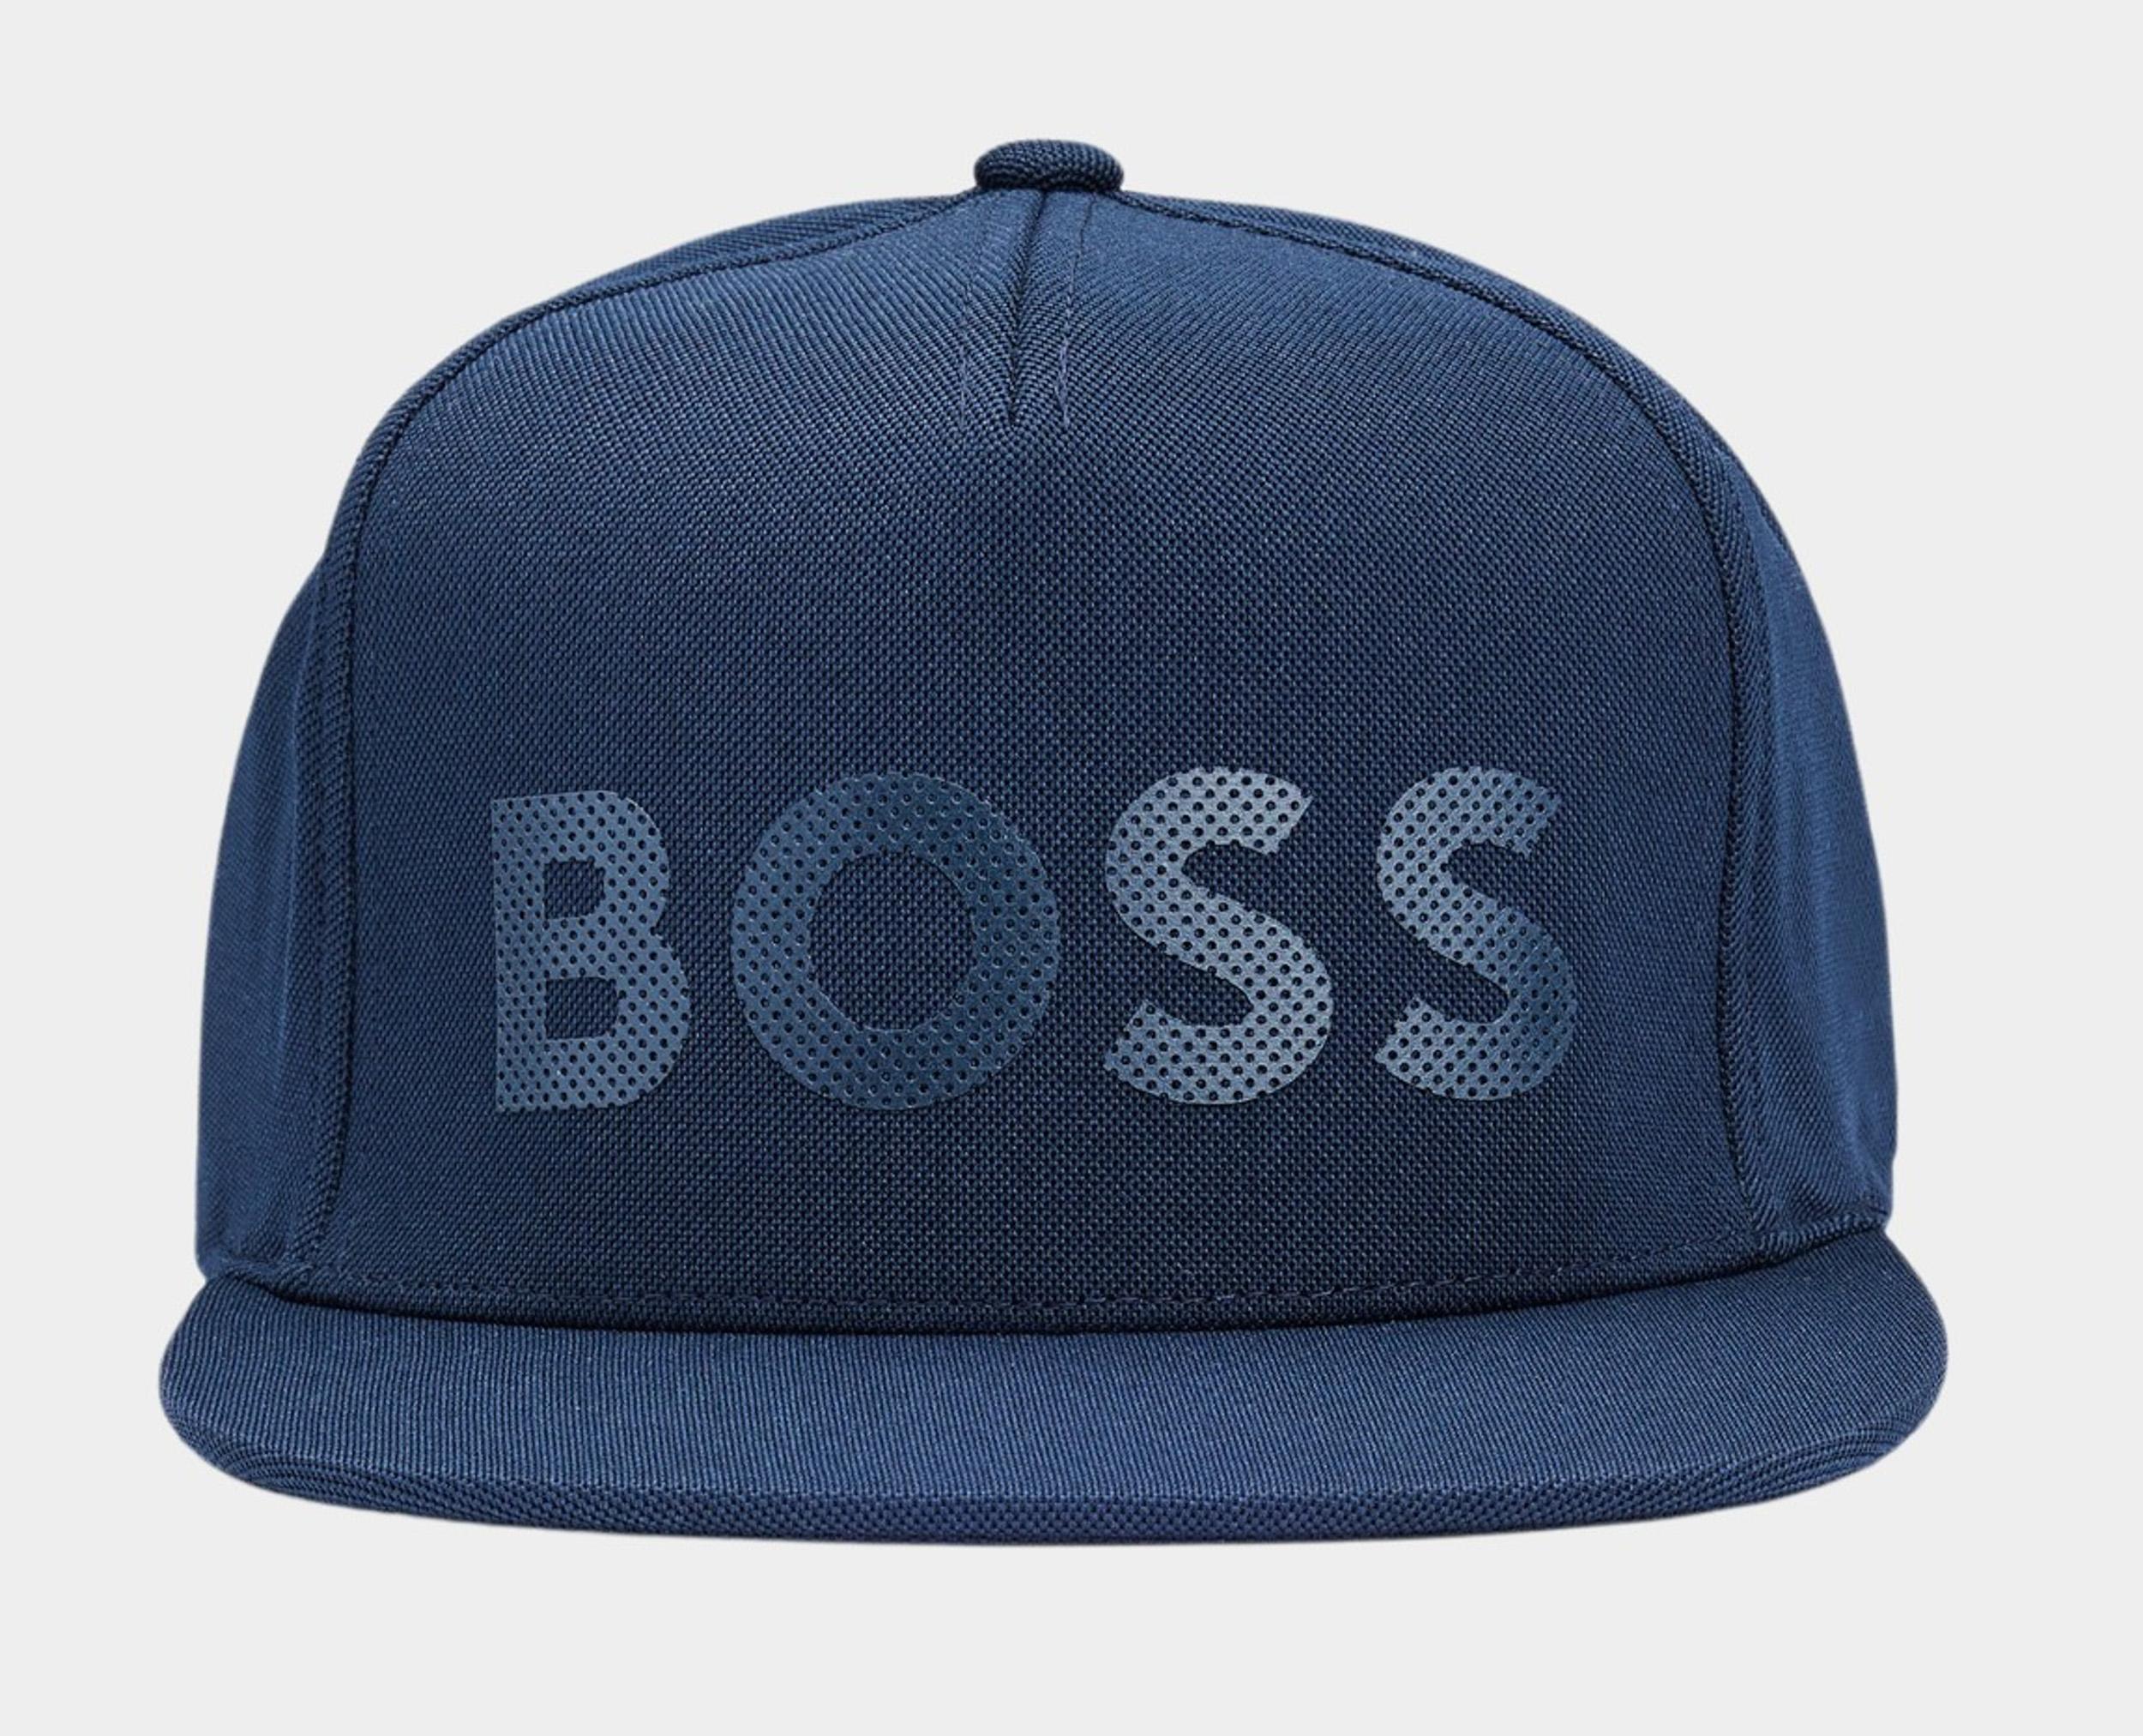 BOSS Green Cap Blauw Cap-BLACK-MIRROR 10248839 01 50502470/402